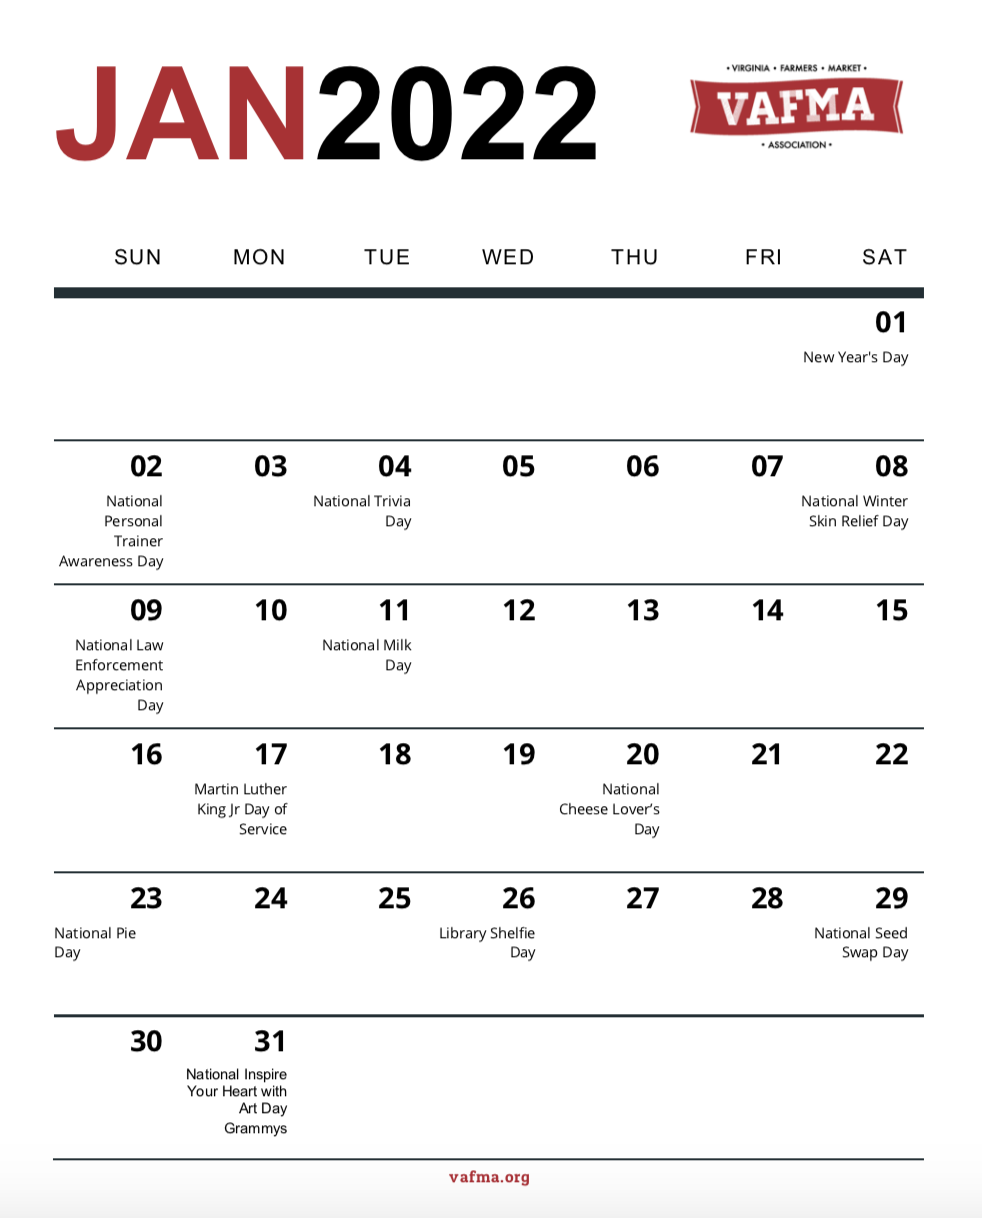 January 2022 Farmers Market Social Media Content Calendar